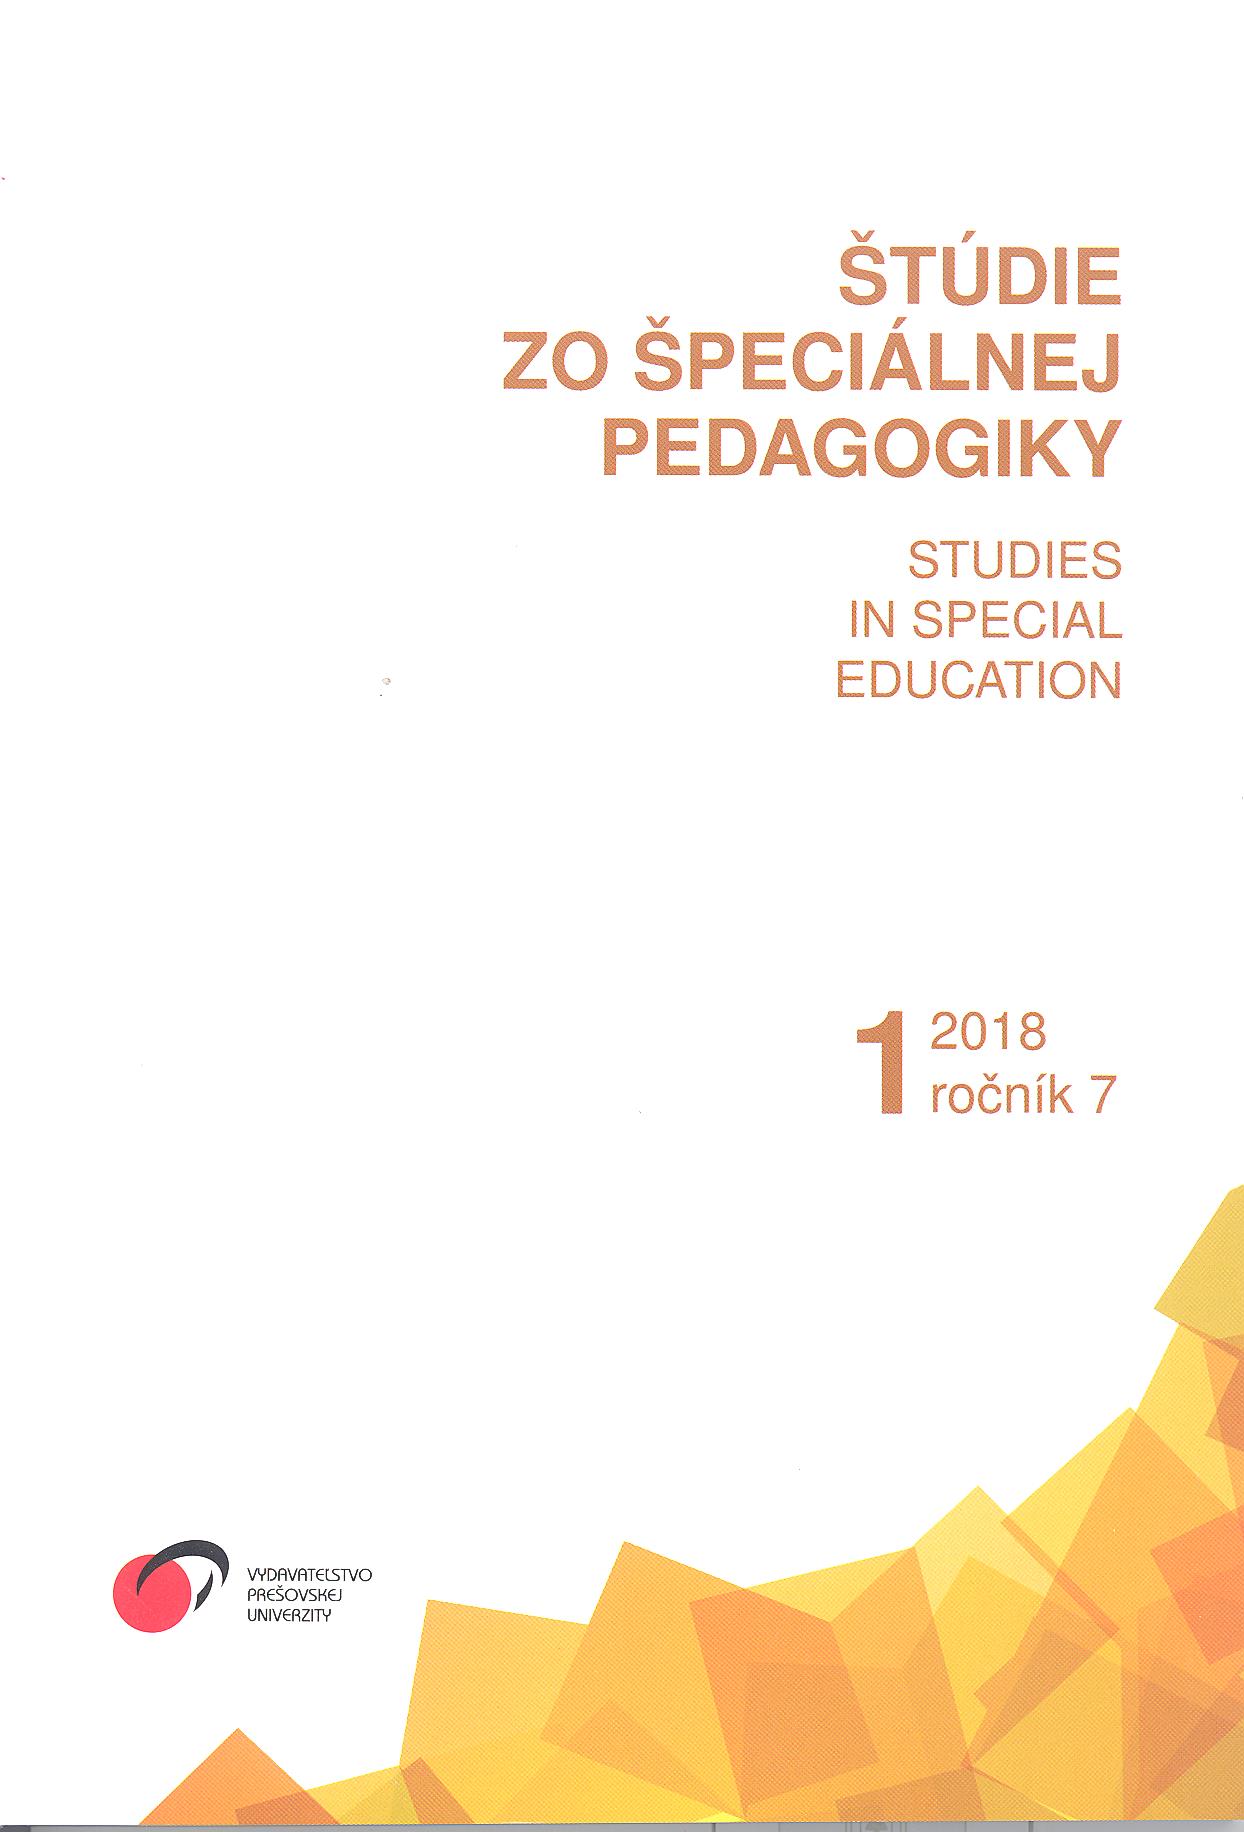 PETRASOVÁ, A., PORUBSKÝ, Š.: Educational Ways of Roma Children from Socially Disadvantaged Backgrounds. Praha: ExtraSYSTEM, 2017. 118 p. ISBN 978-80-87570-37-1. Cover Image